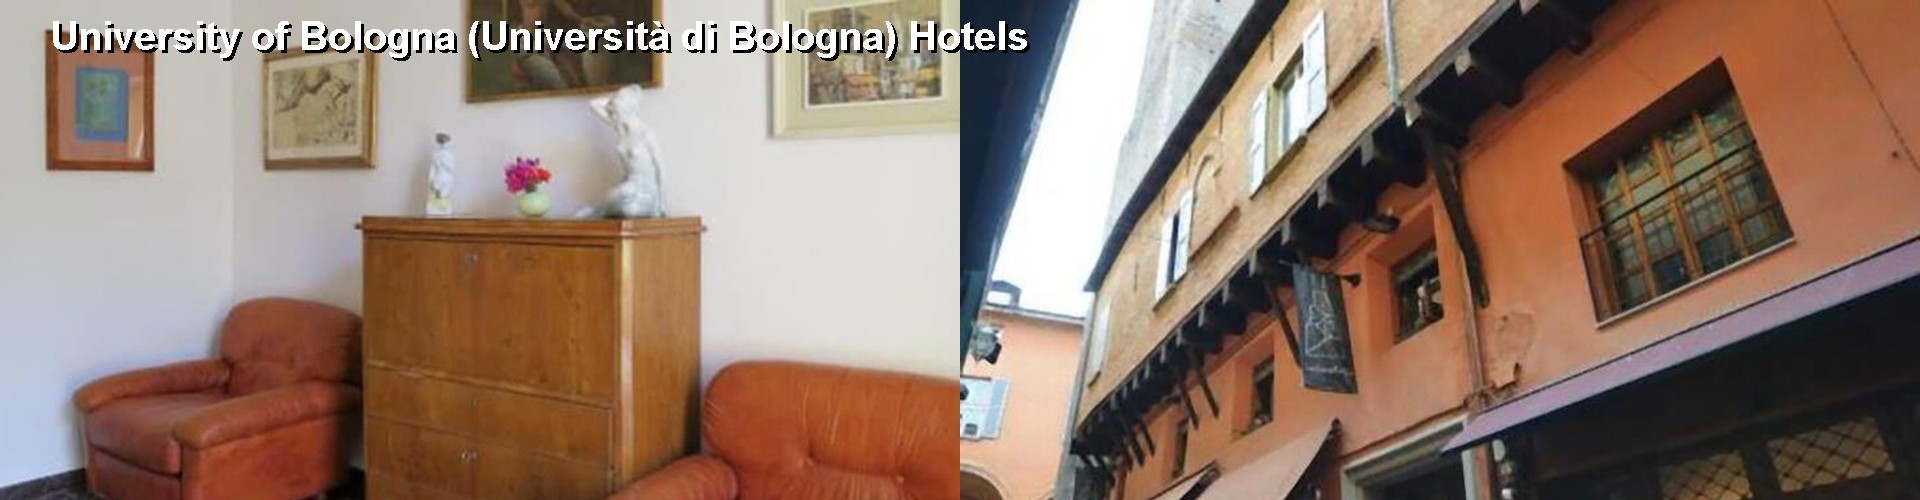 5 Best Hotels near University of Bologna (Università di Bologna)